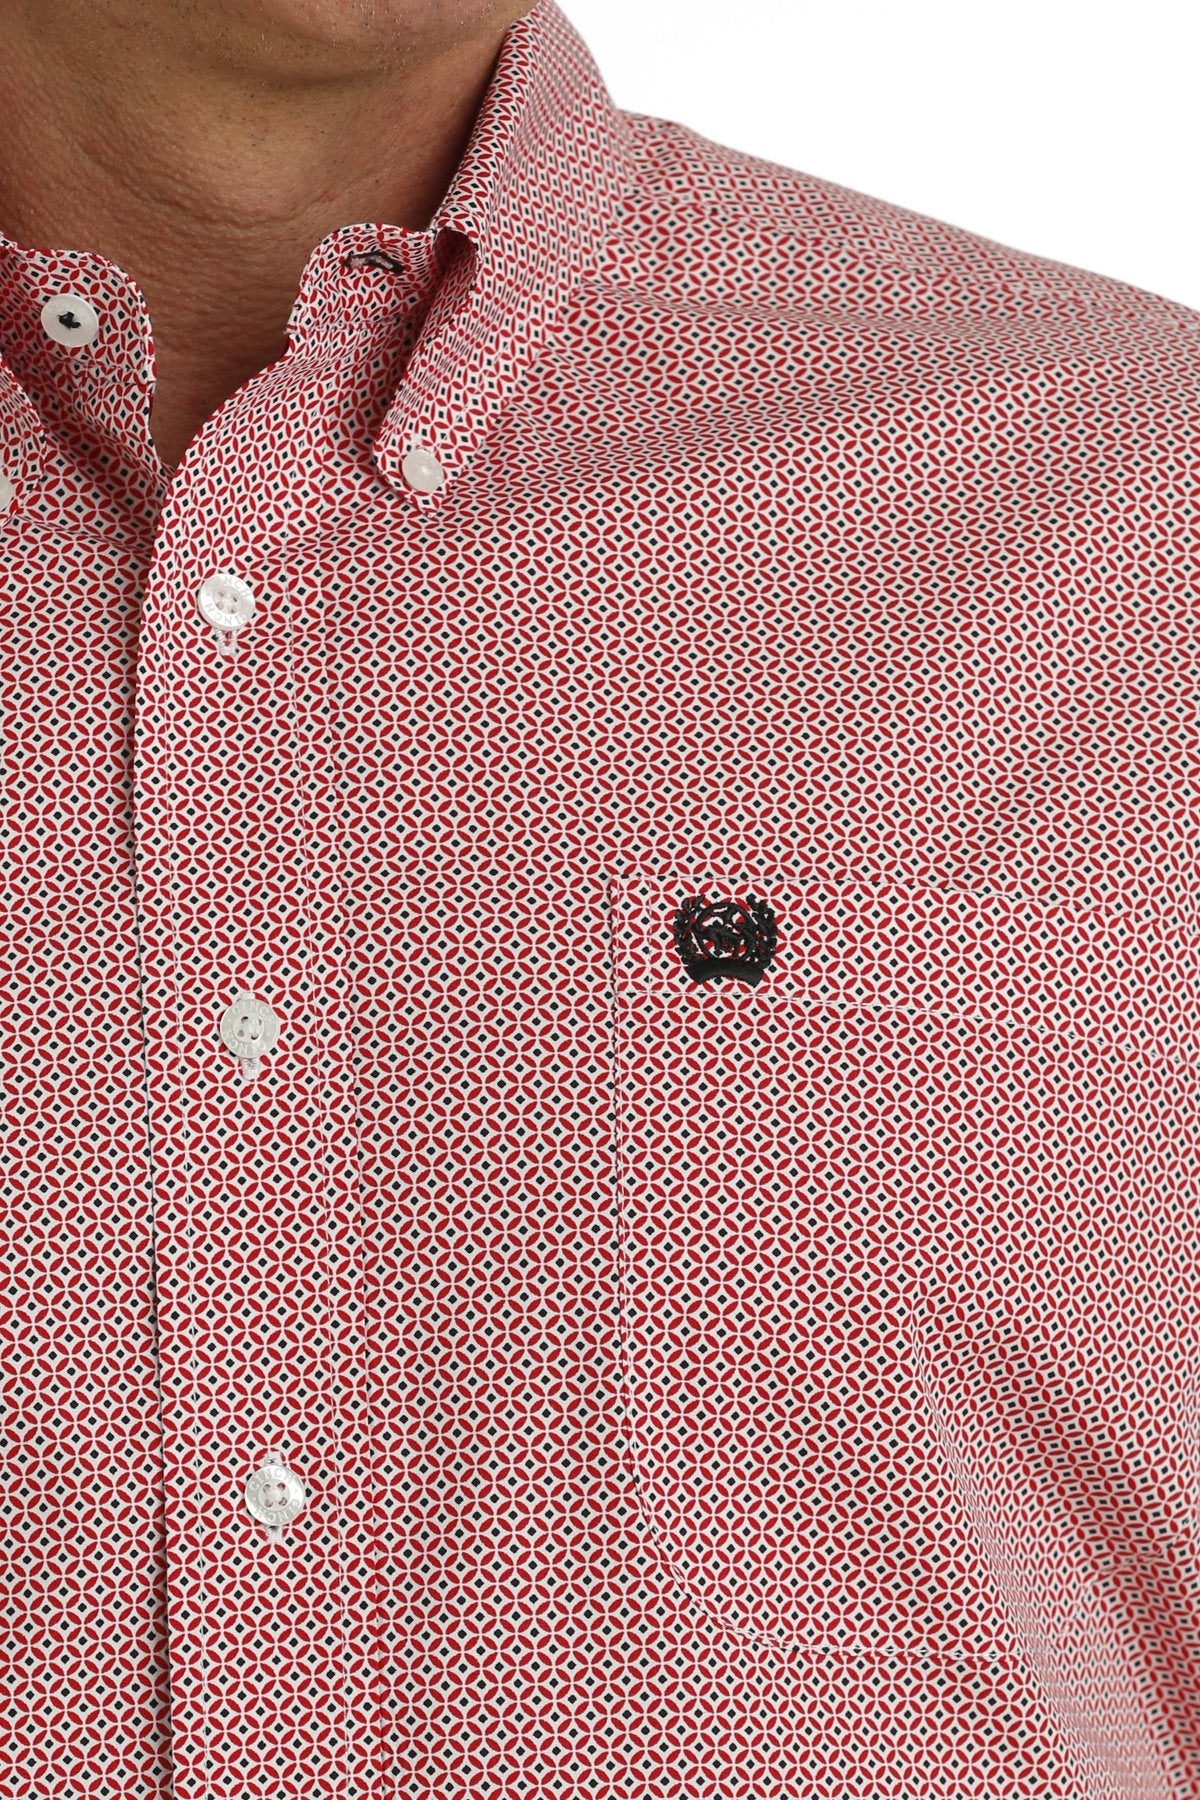 Cinch Men's Geometric Print Button Down Short Sleeve - Red/White